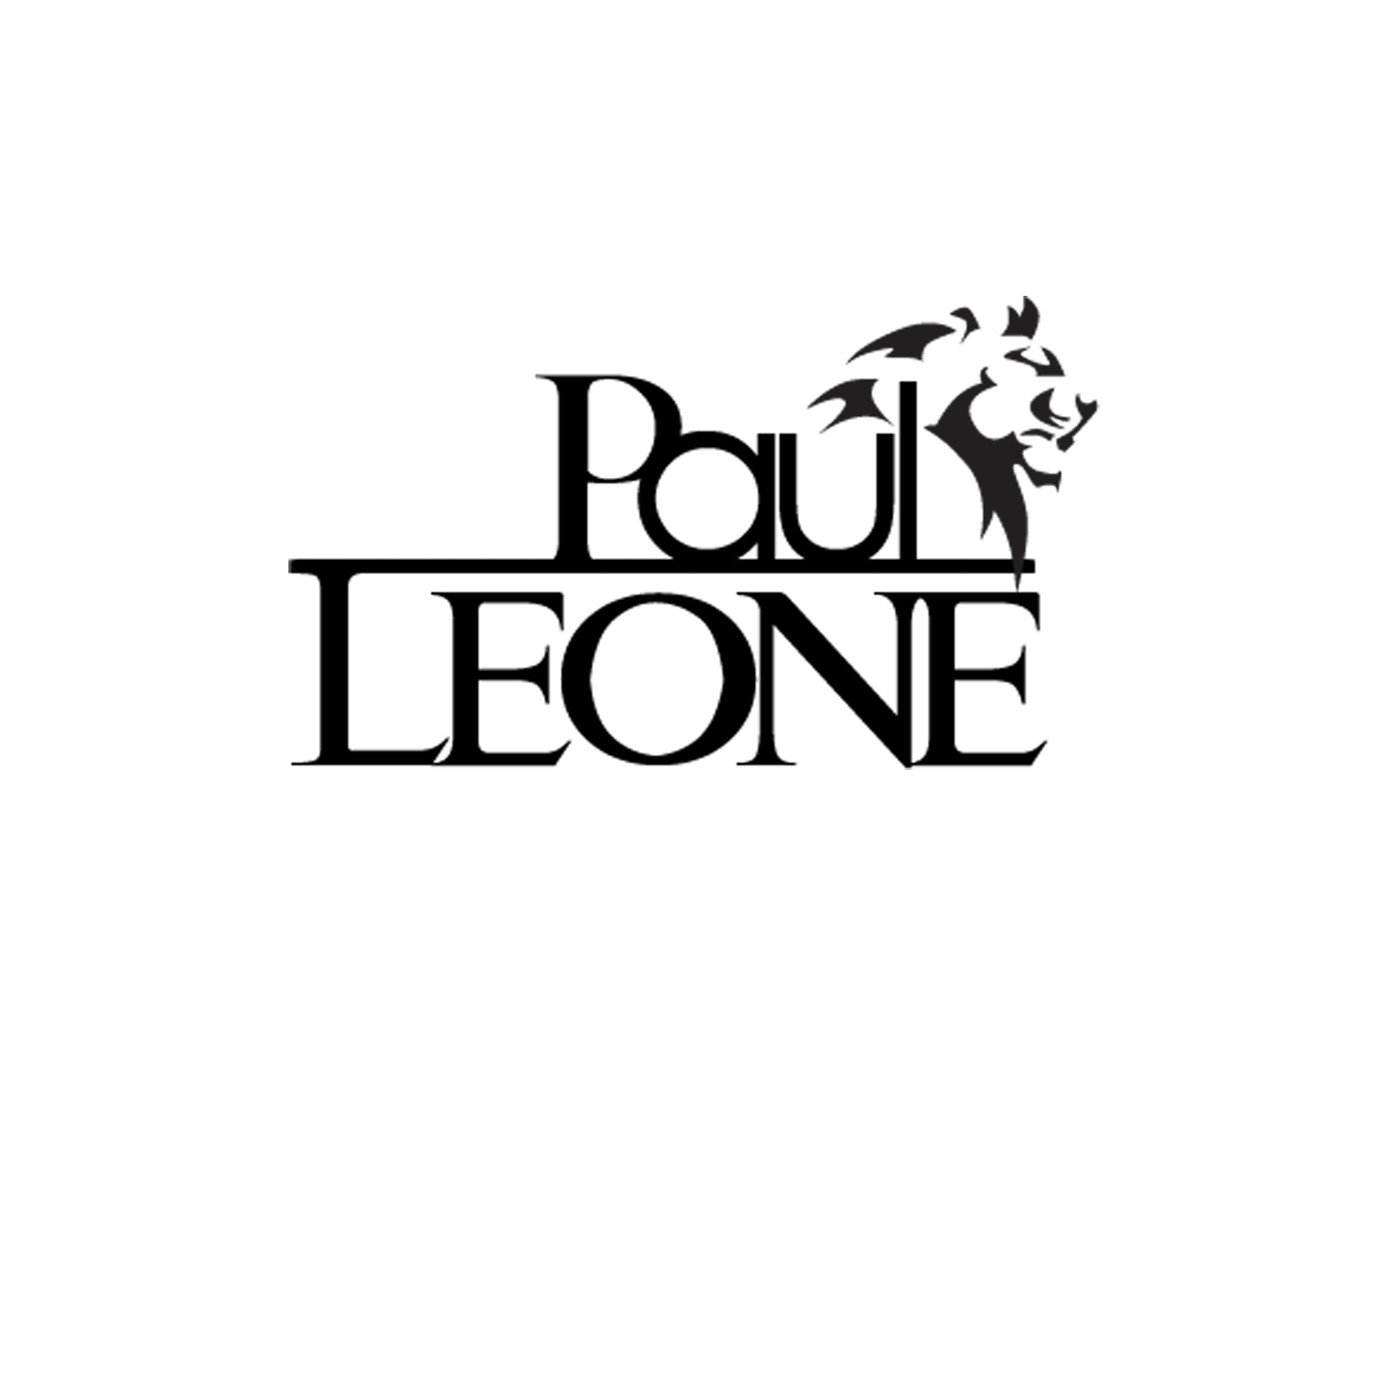 Paul leone - Love Parade (Original Mix)